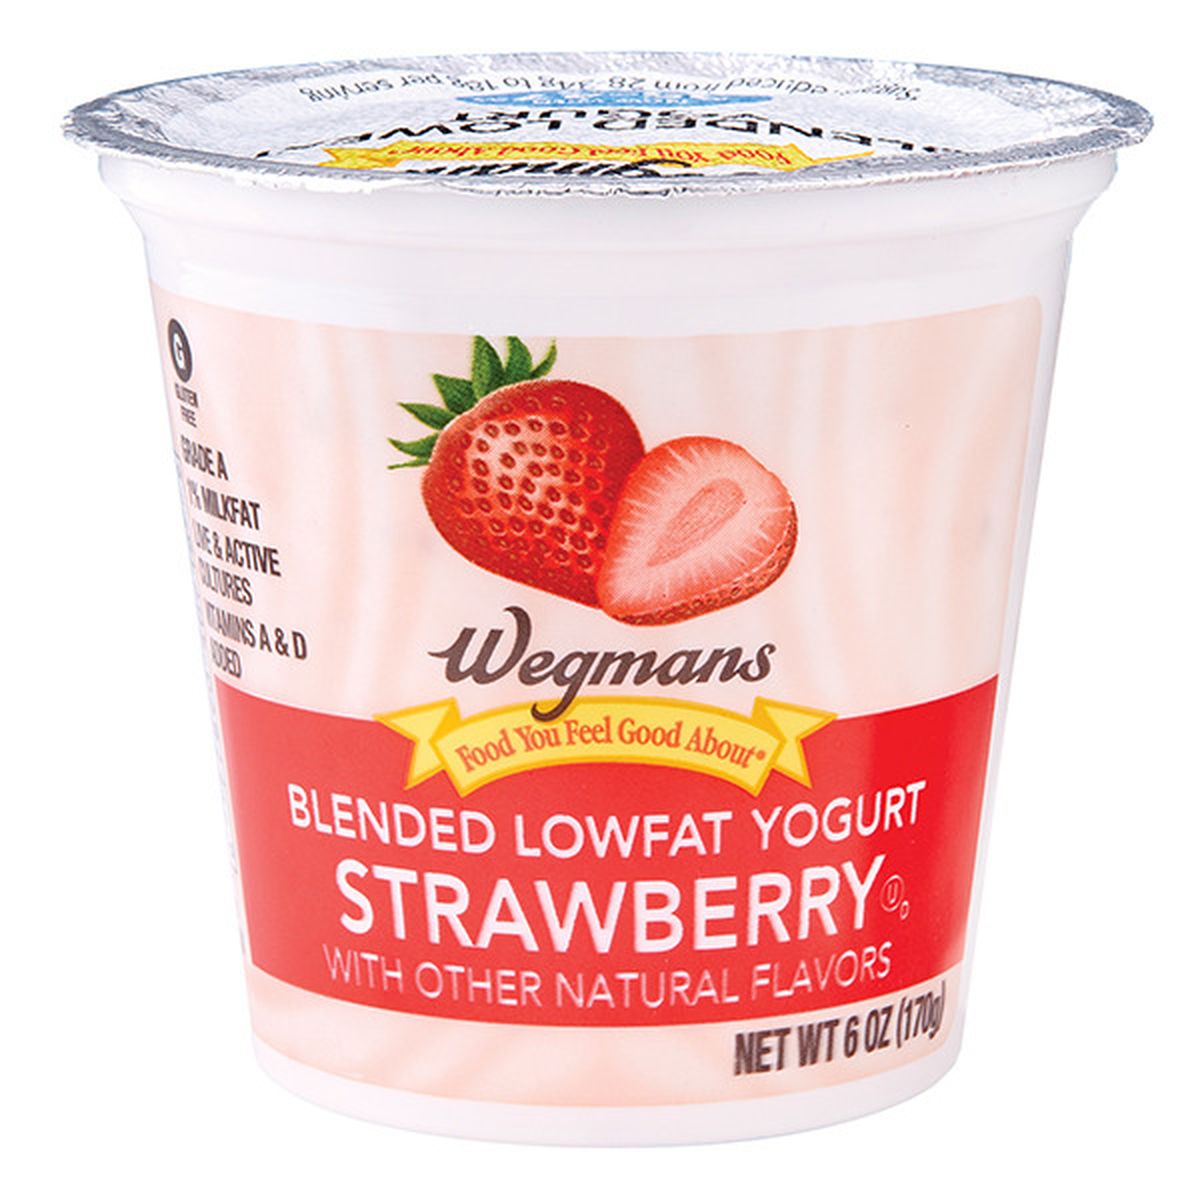 Calories in Wegmans Strawberry Blended Lowfat Yogurt